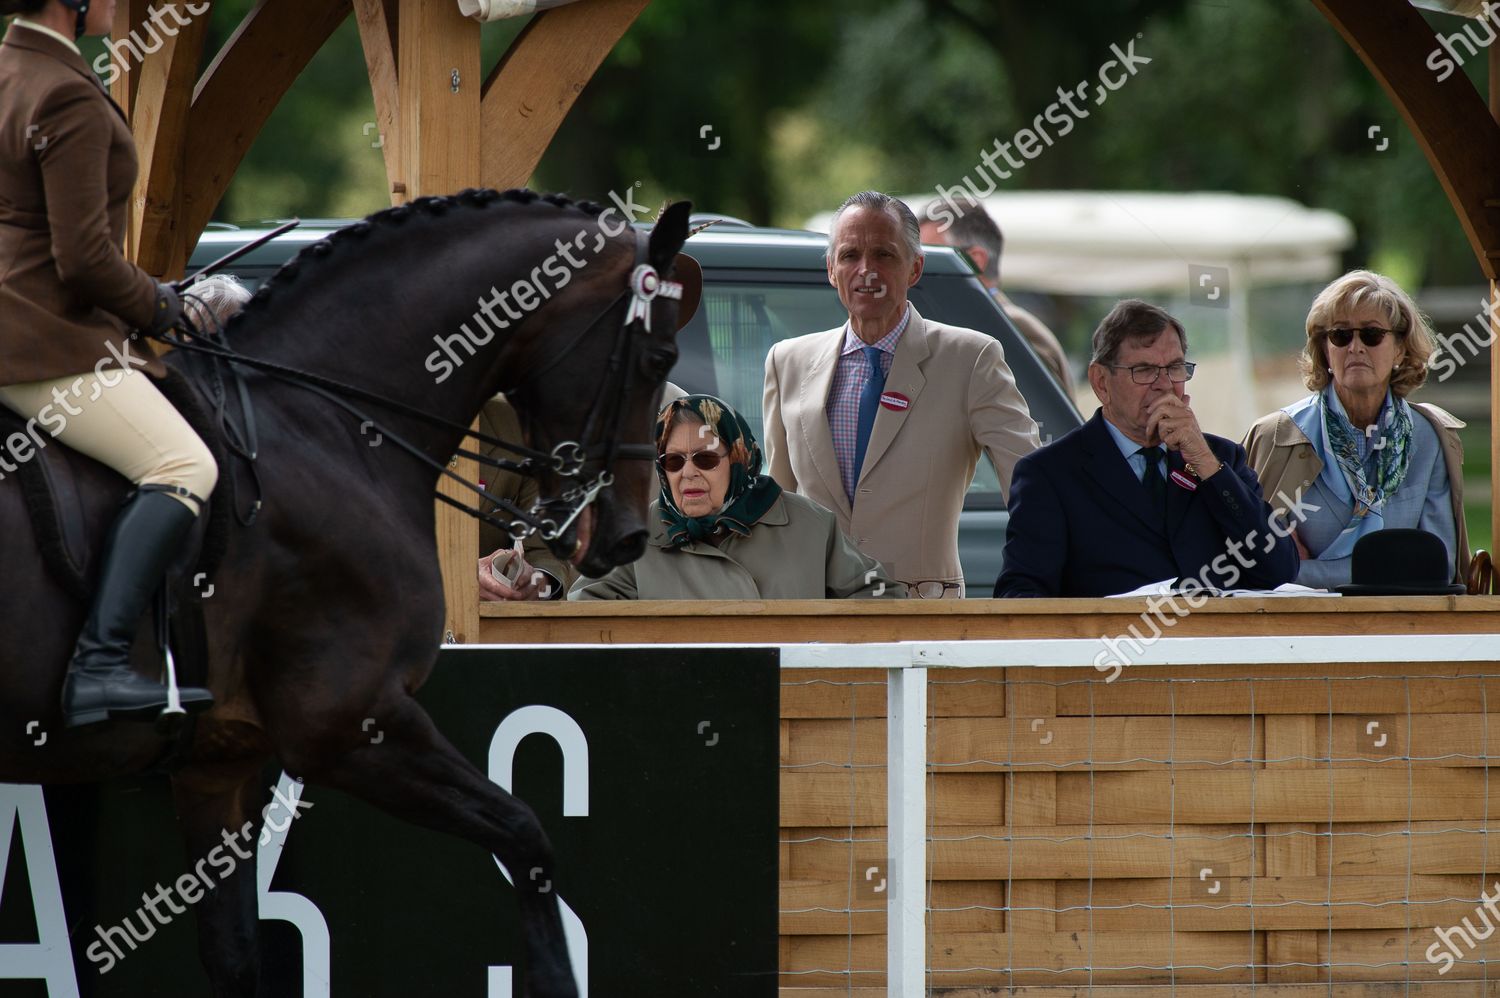 royal-windsor-horse-show-day-3-berkshire-uk-shutterstock-editorial-12195342n.jpg